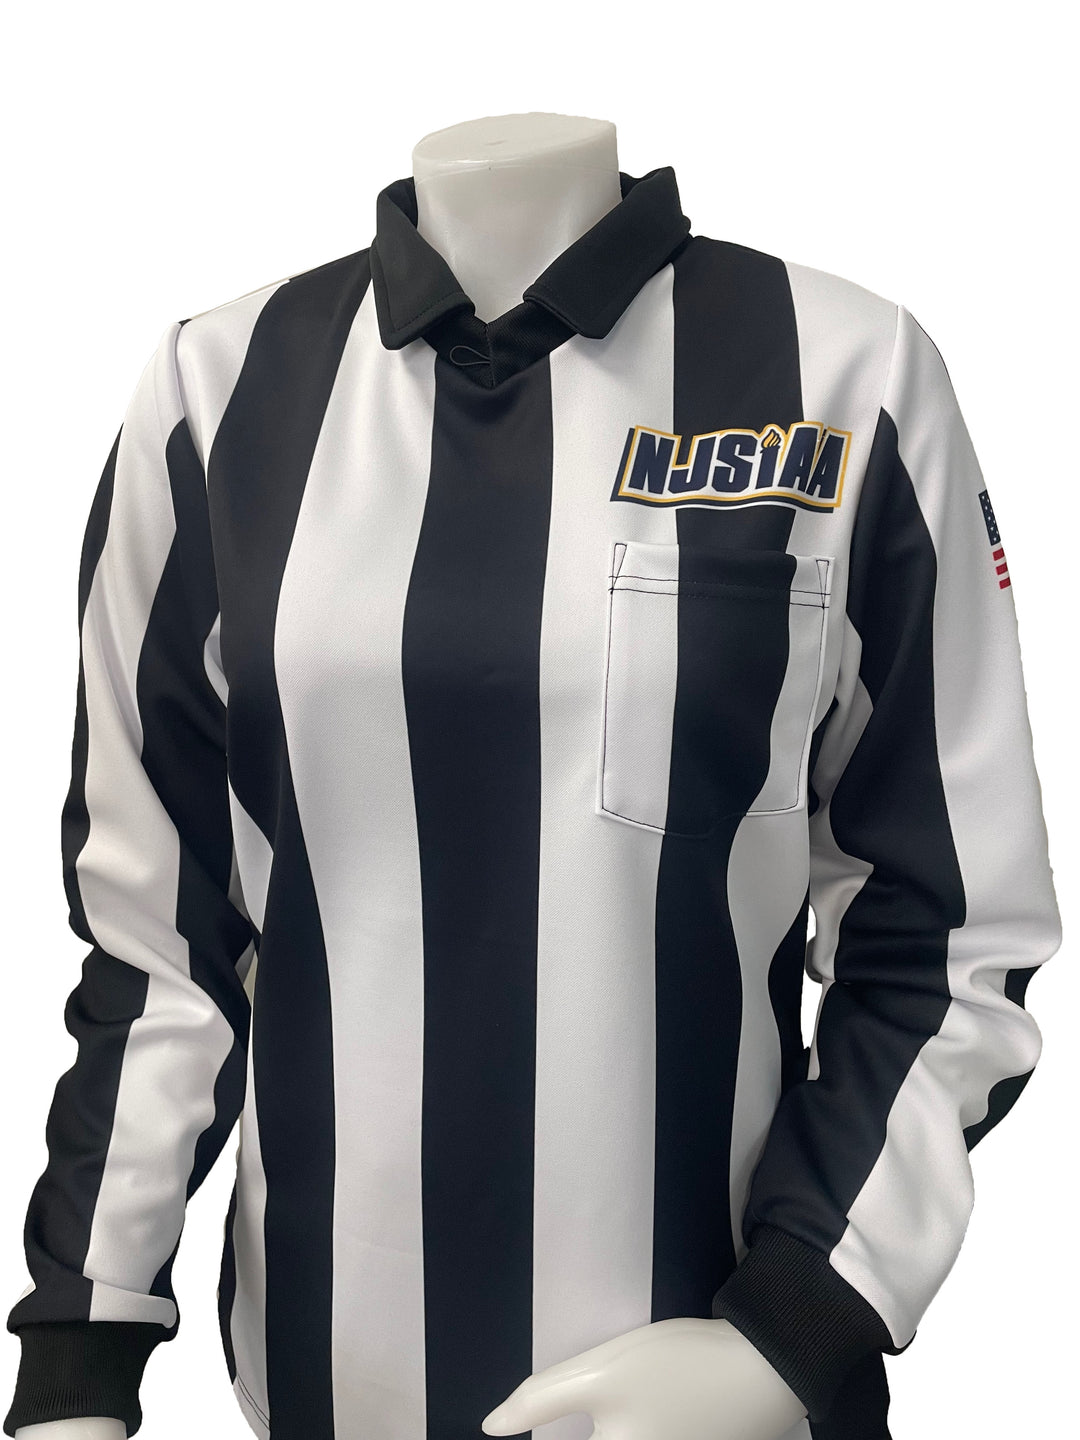 USA148NJ - Smitty "Made in USA" - NJSIAA Women's Football and Lacrosse Long Sleeve Shirt